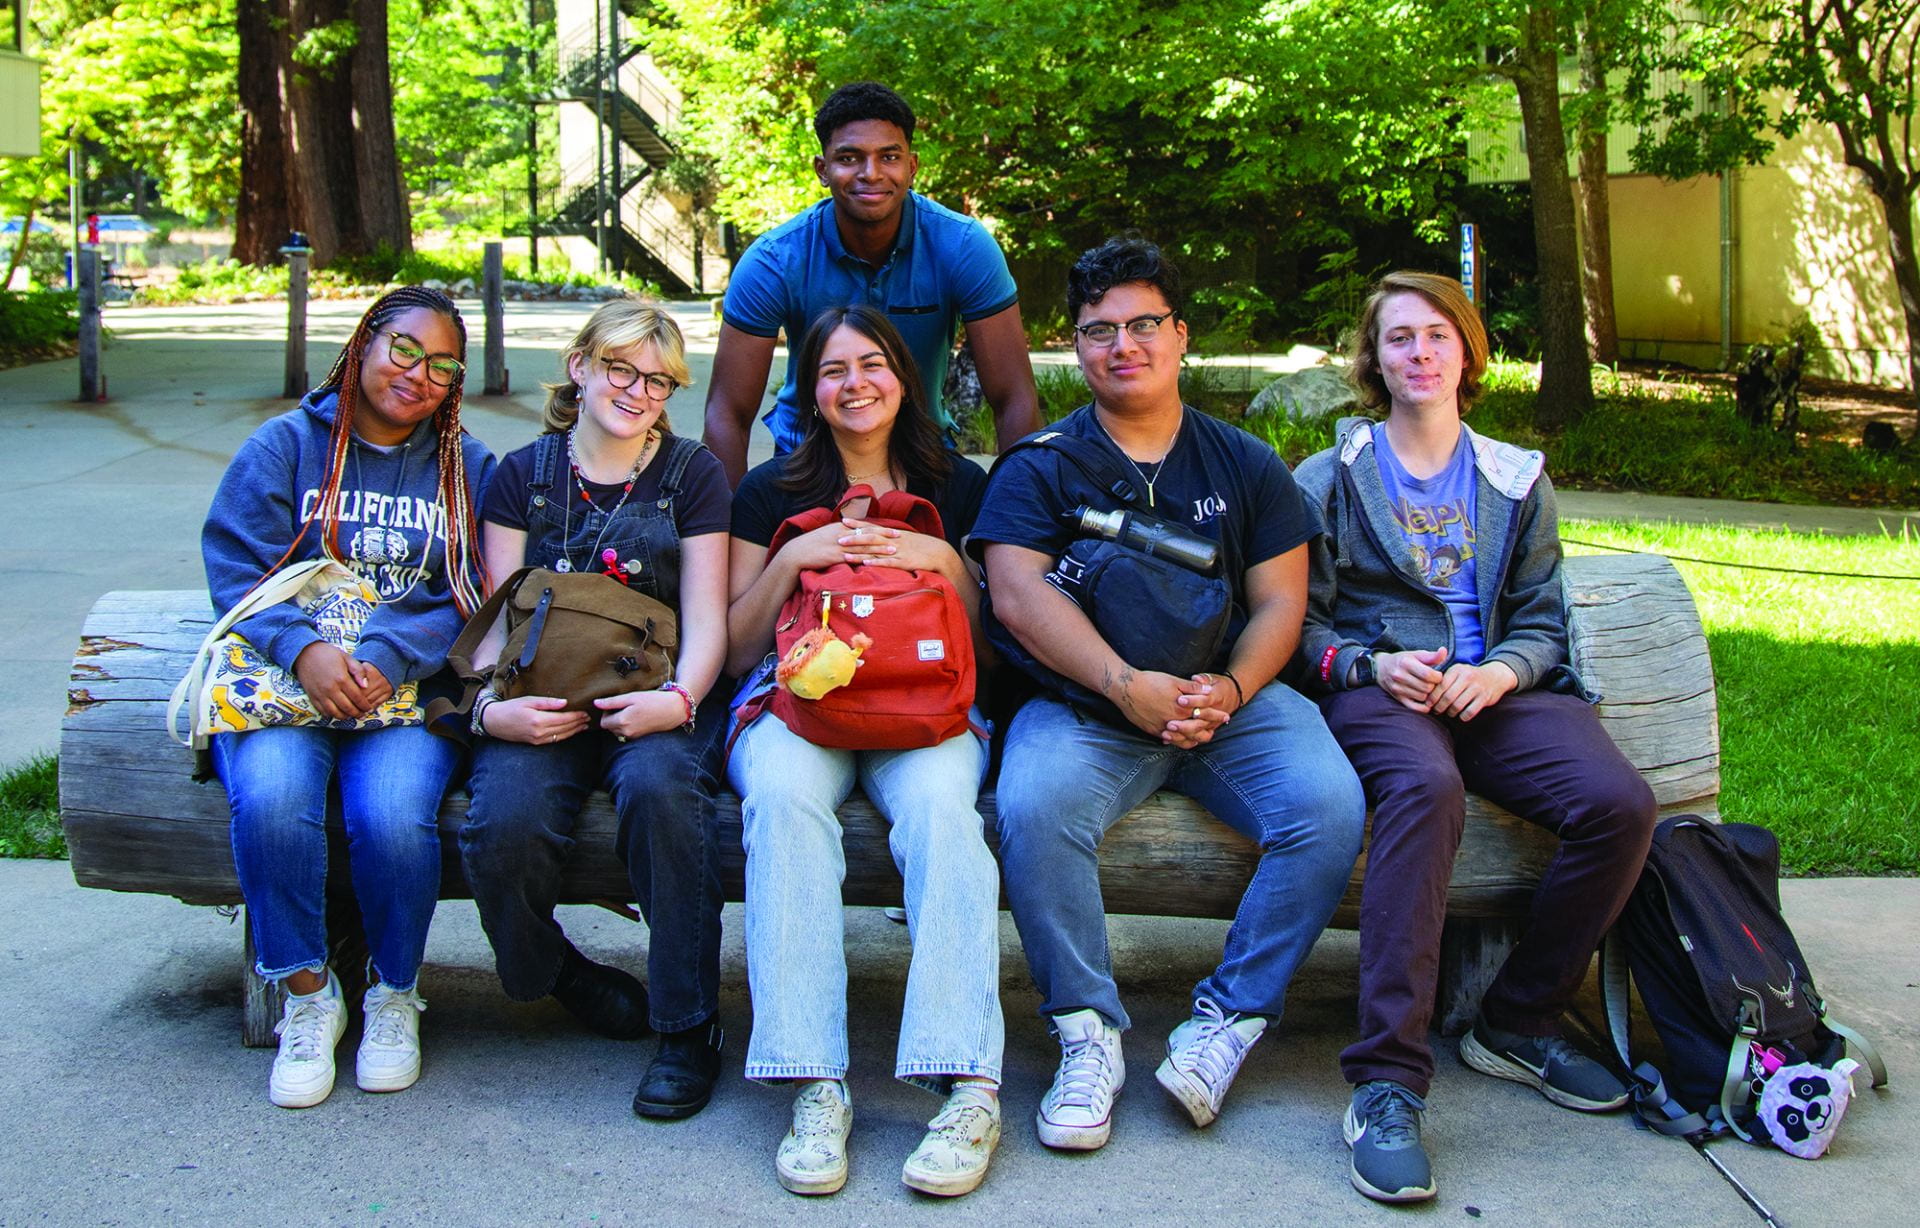 Six students sitting on a bench at UC Santa Cruz, posing for a photo.